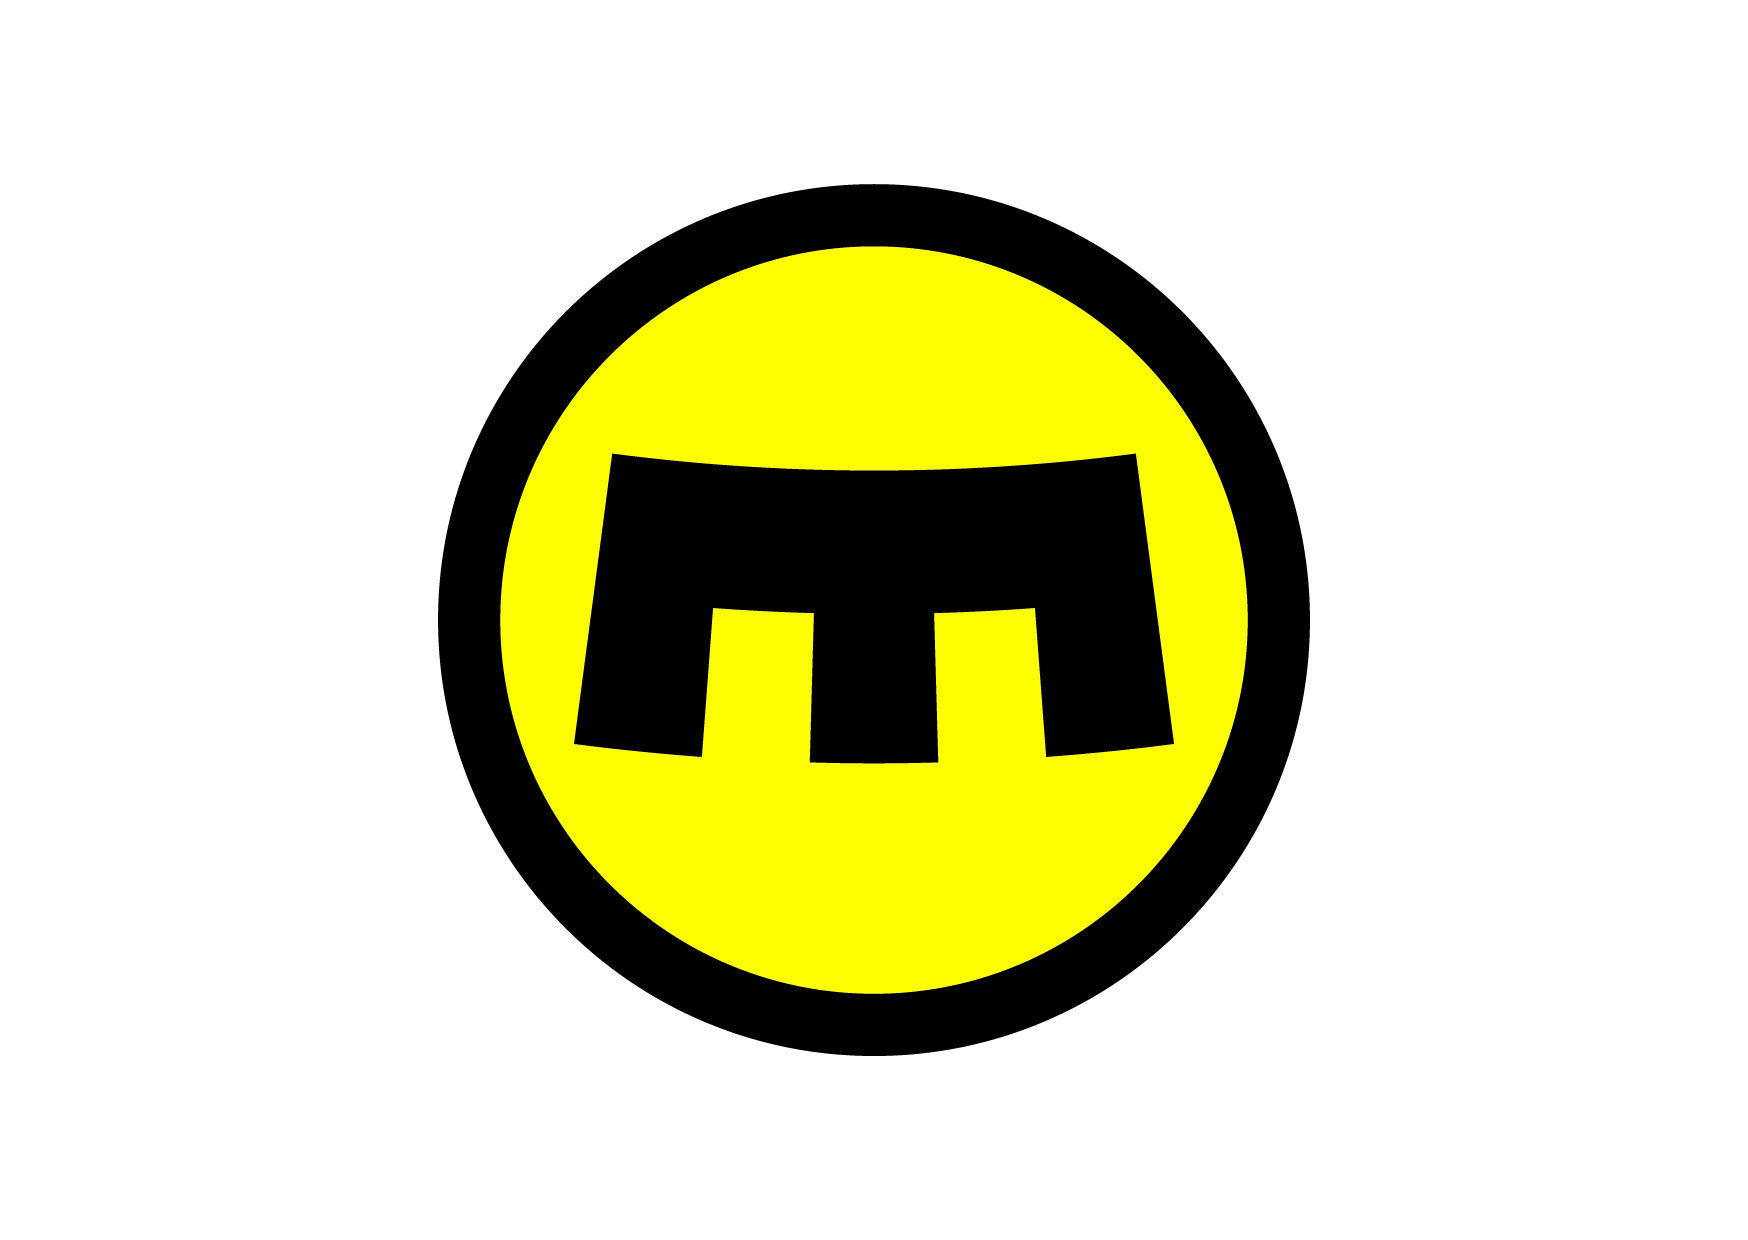 Magura Logo - www.magura.com - /2019/Powersports/Logos/MAGURA Logos/